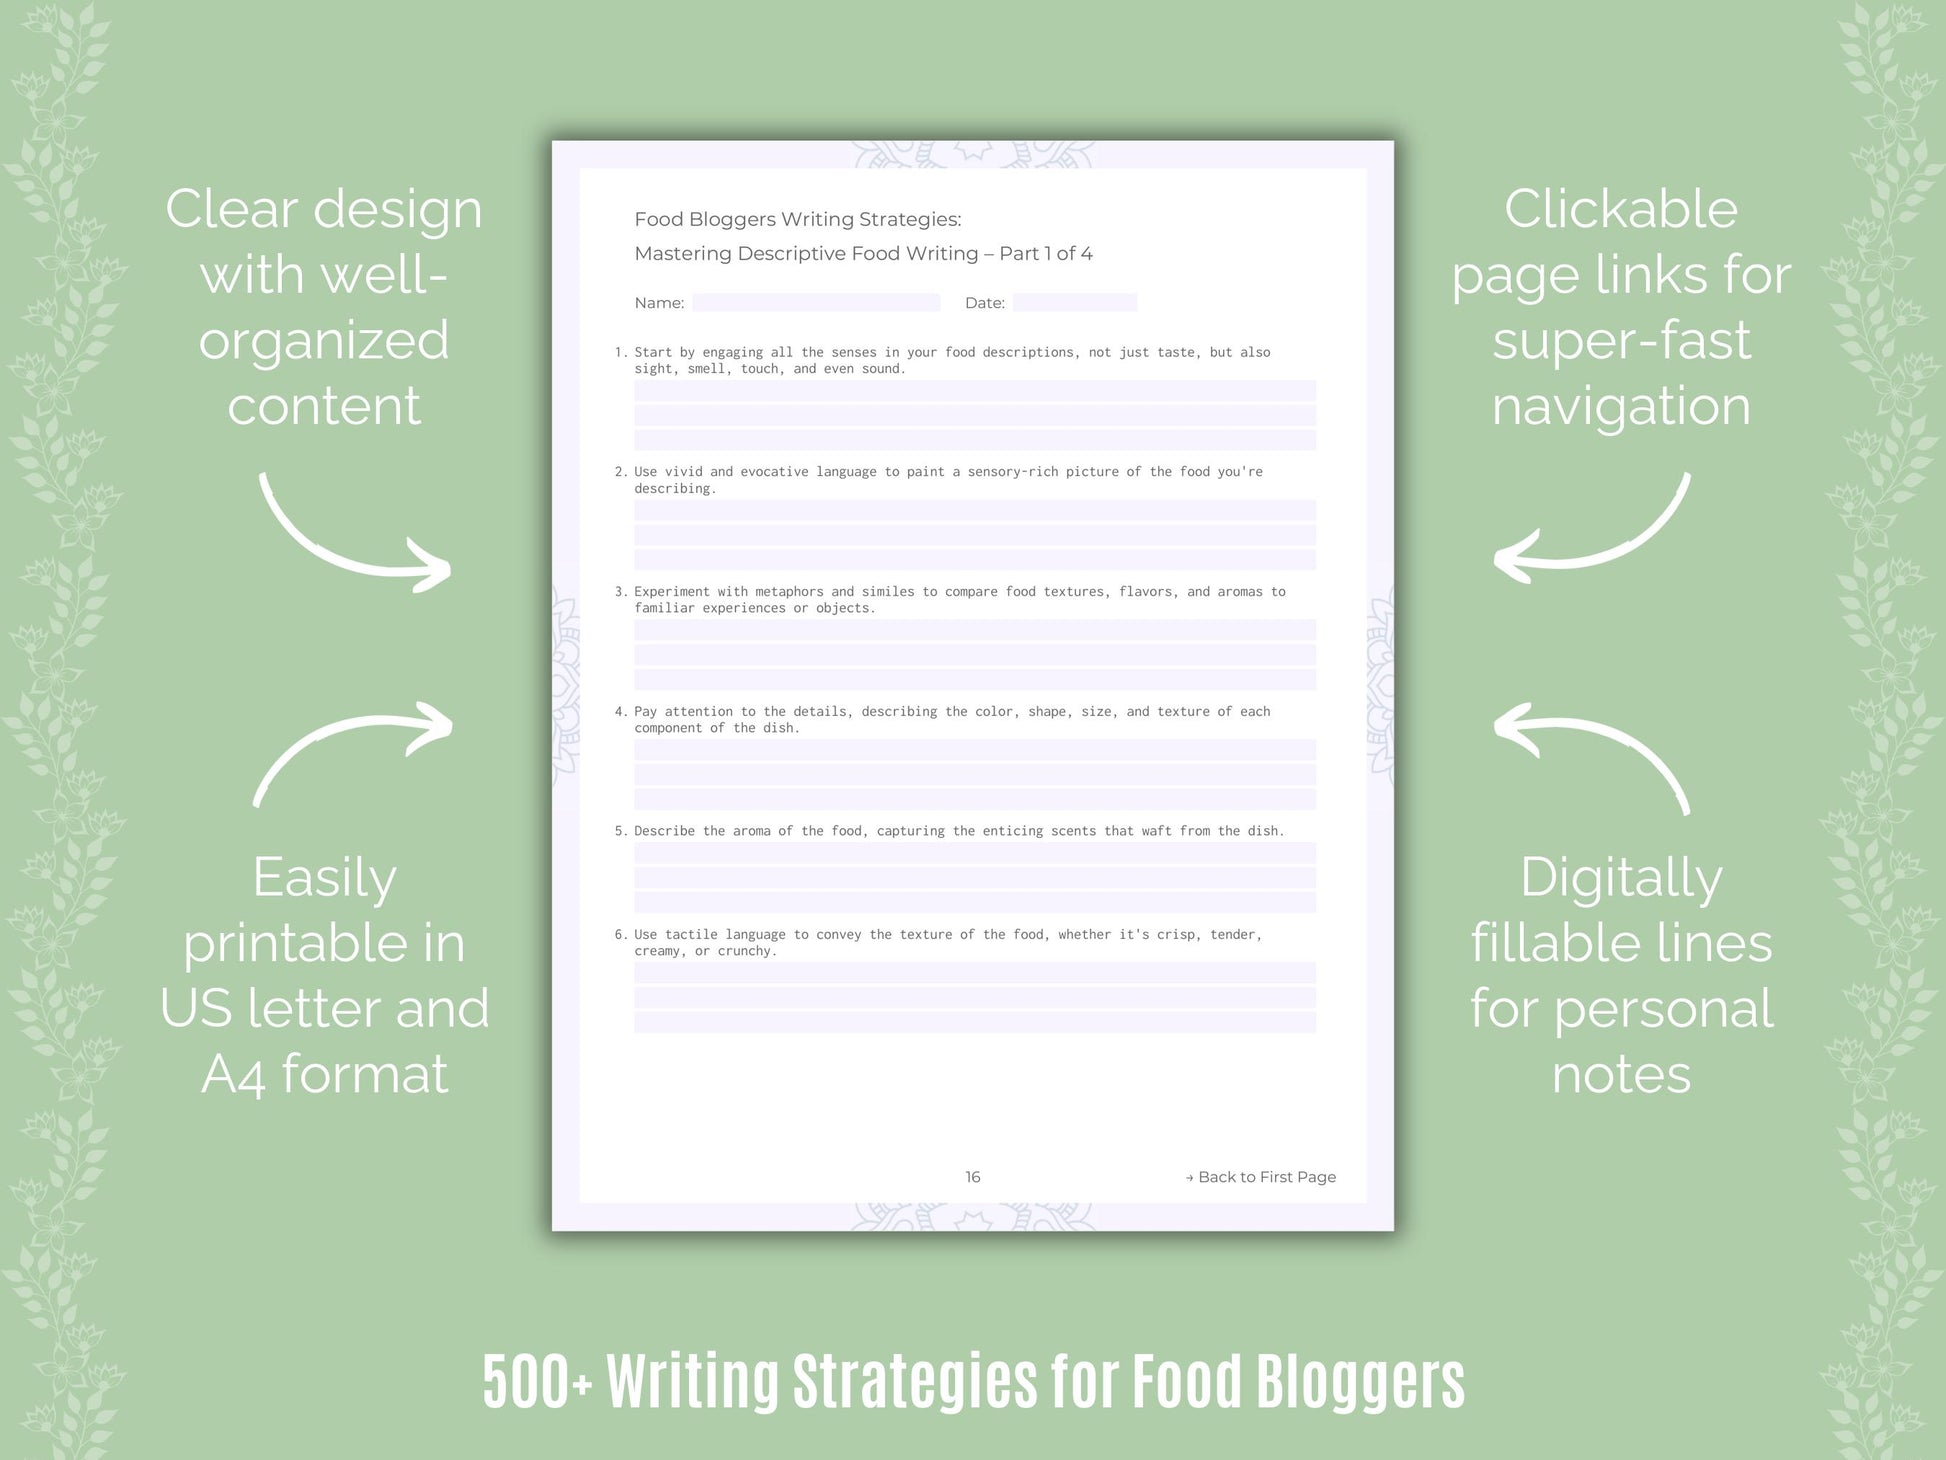 Food Bloggers Writing Strategies Resource